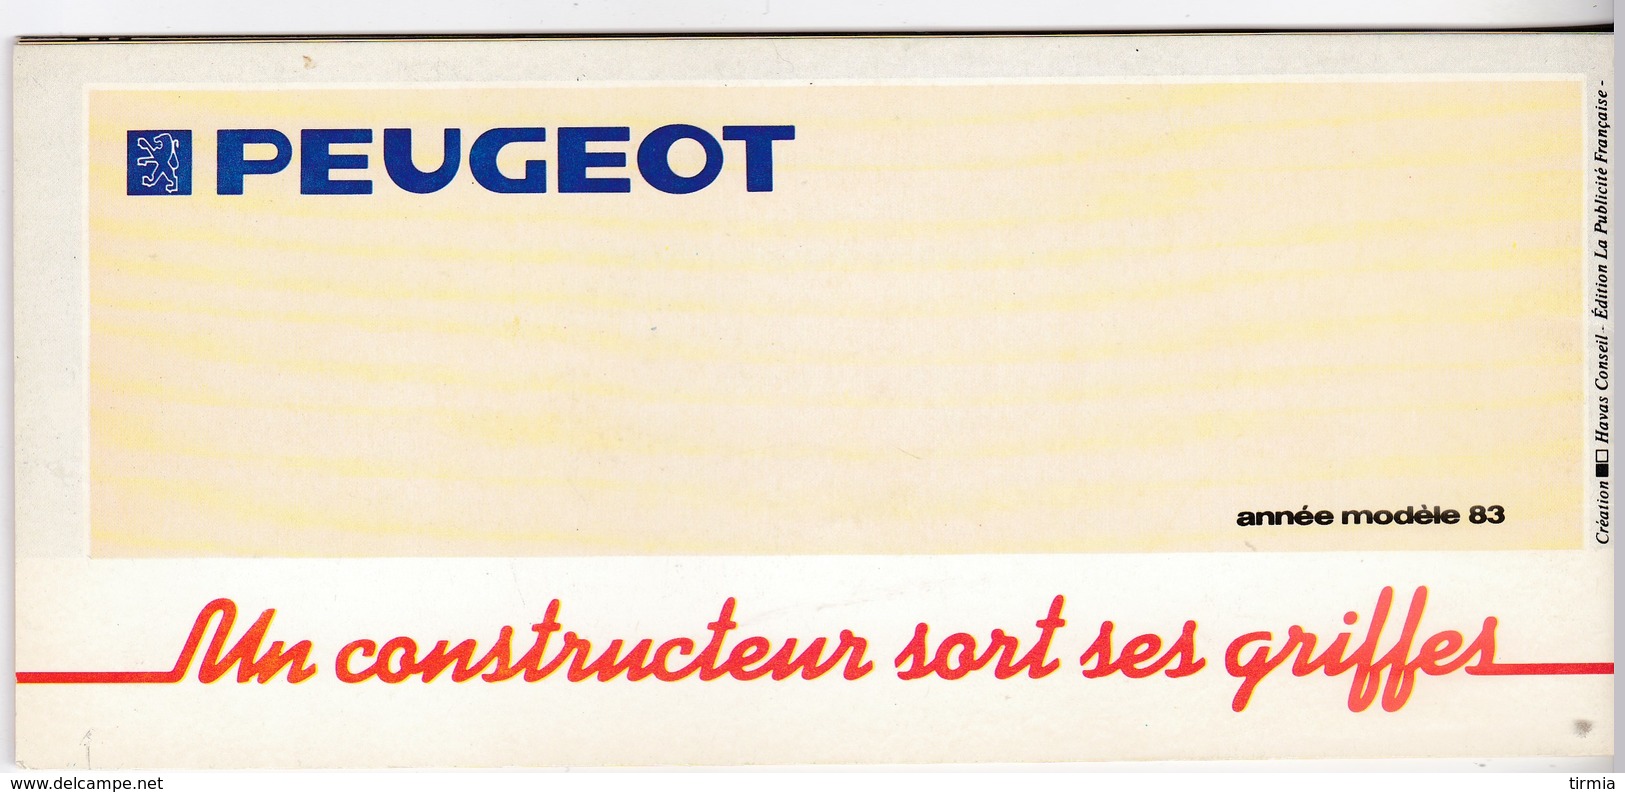 Catalogue - Peugeot Gamme 83 - Voitures